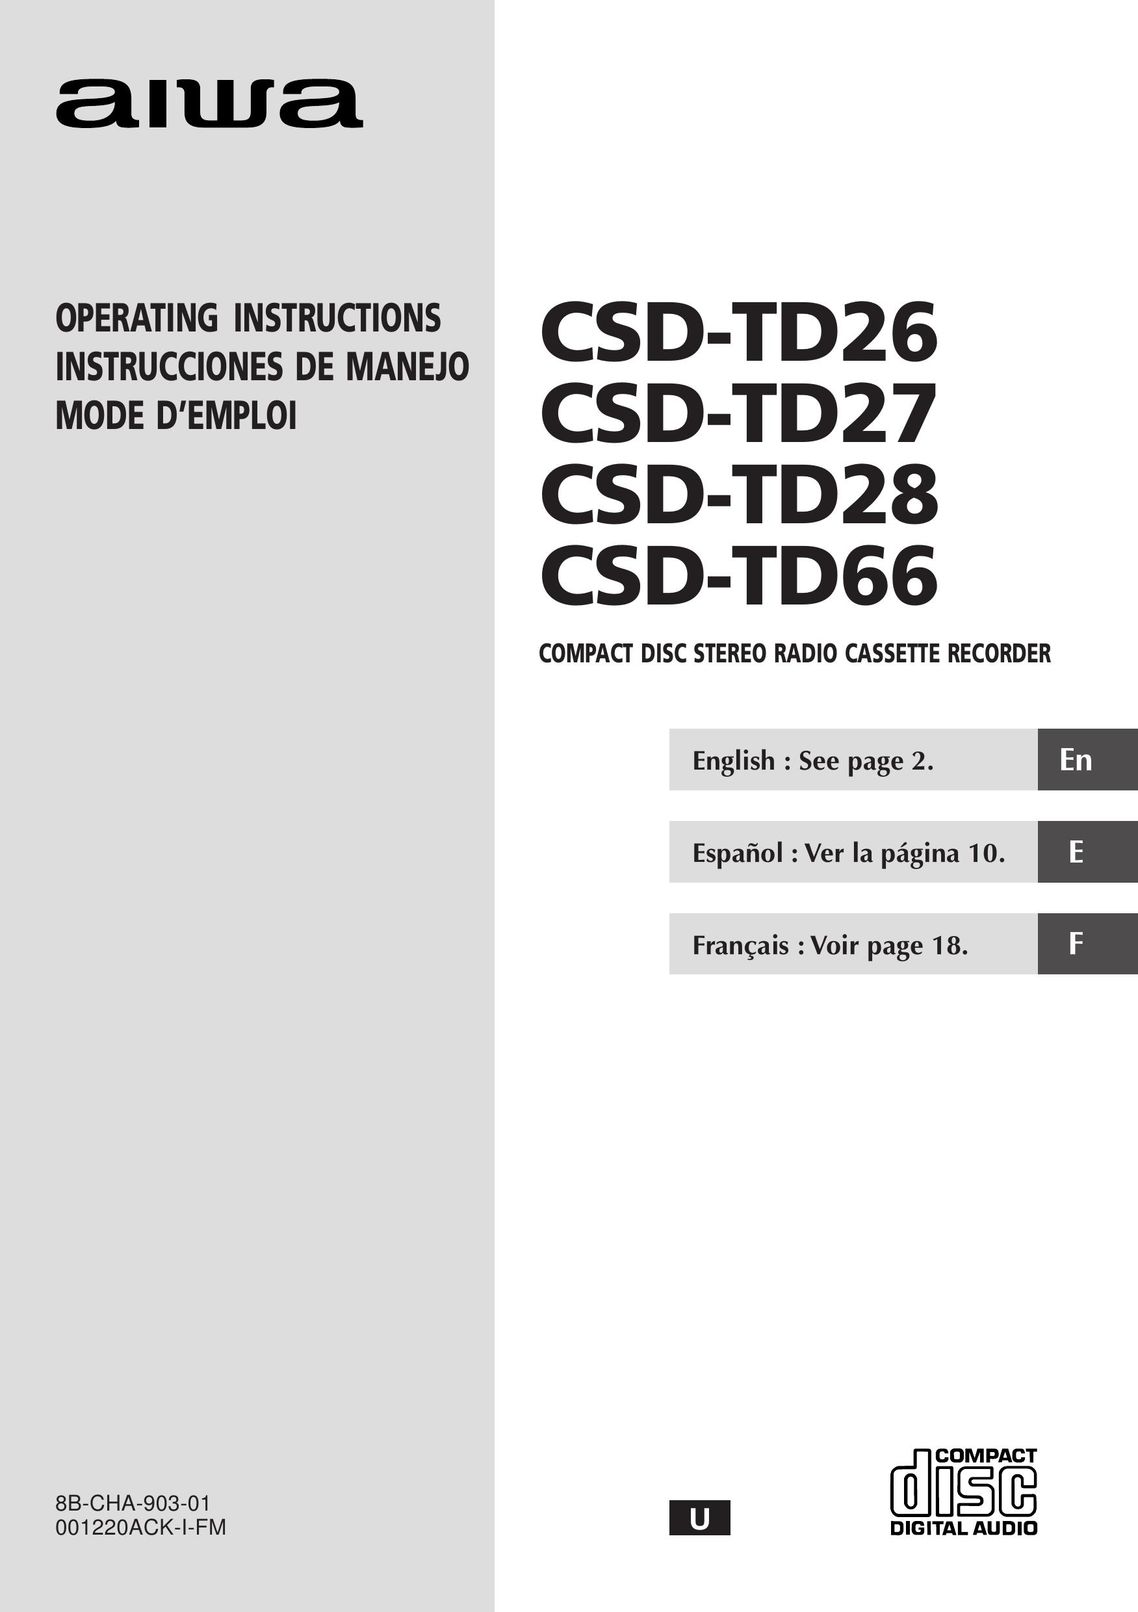 Aiwa CSD-TD66 CD Player User Manual (Page 1)